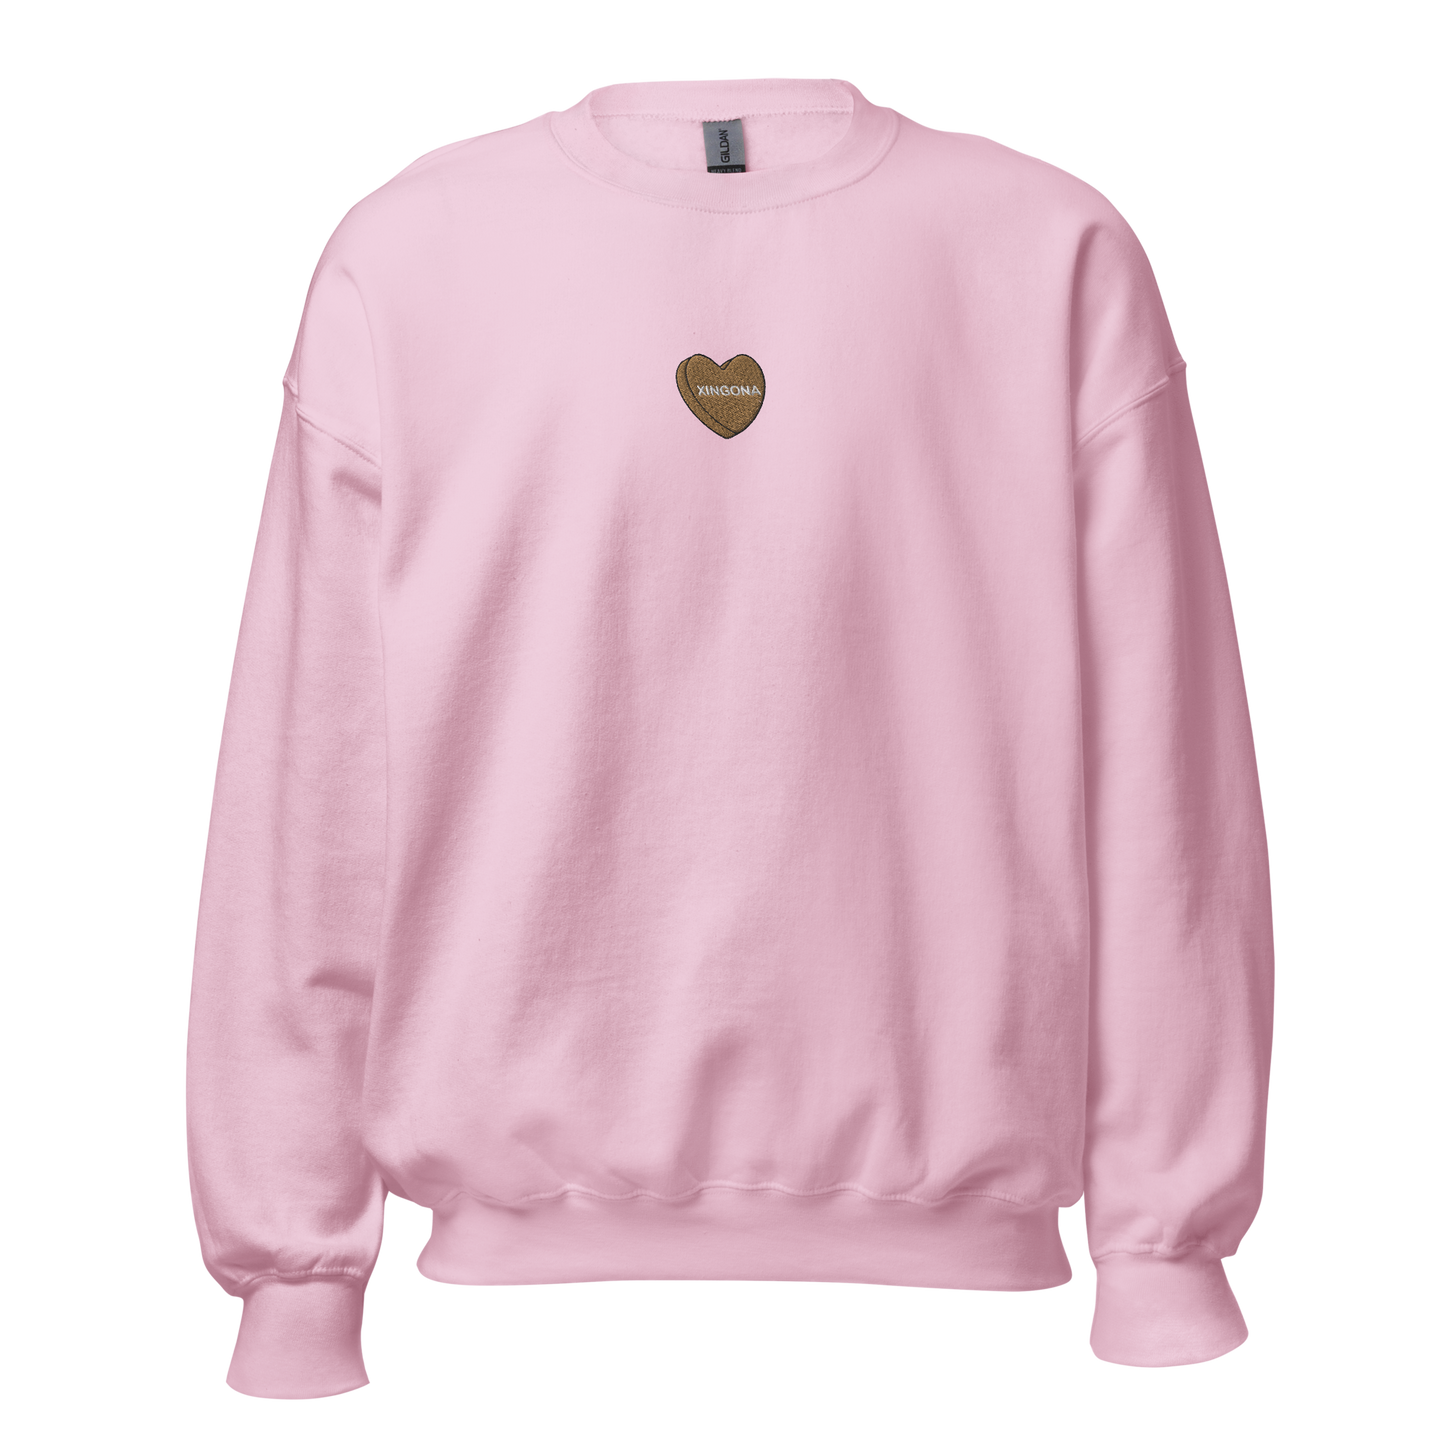 Xingona (Bad Ass) Candy Conversation Heart - Embroidered Unisex Sweatshirt